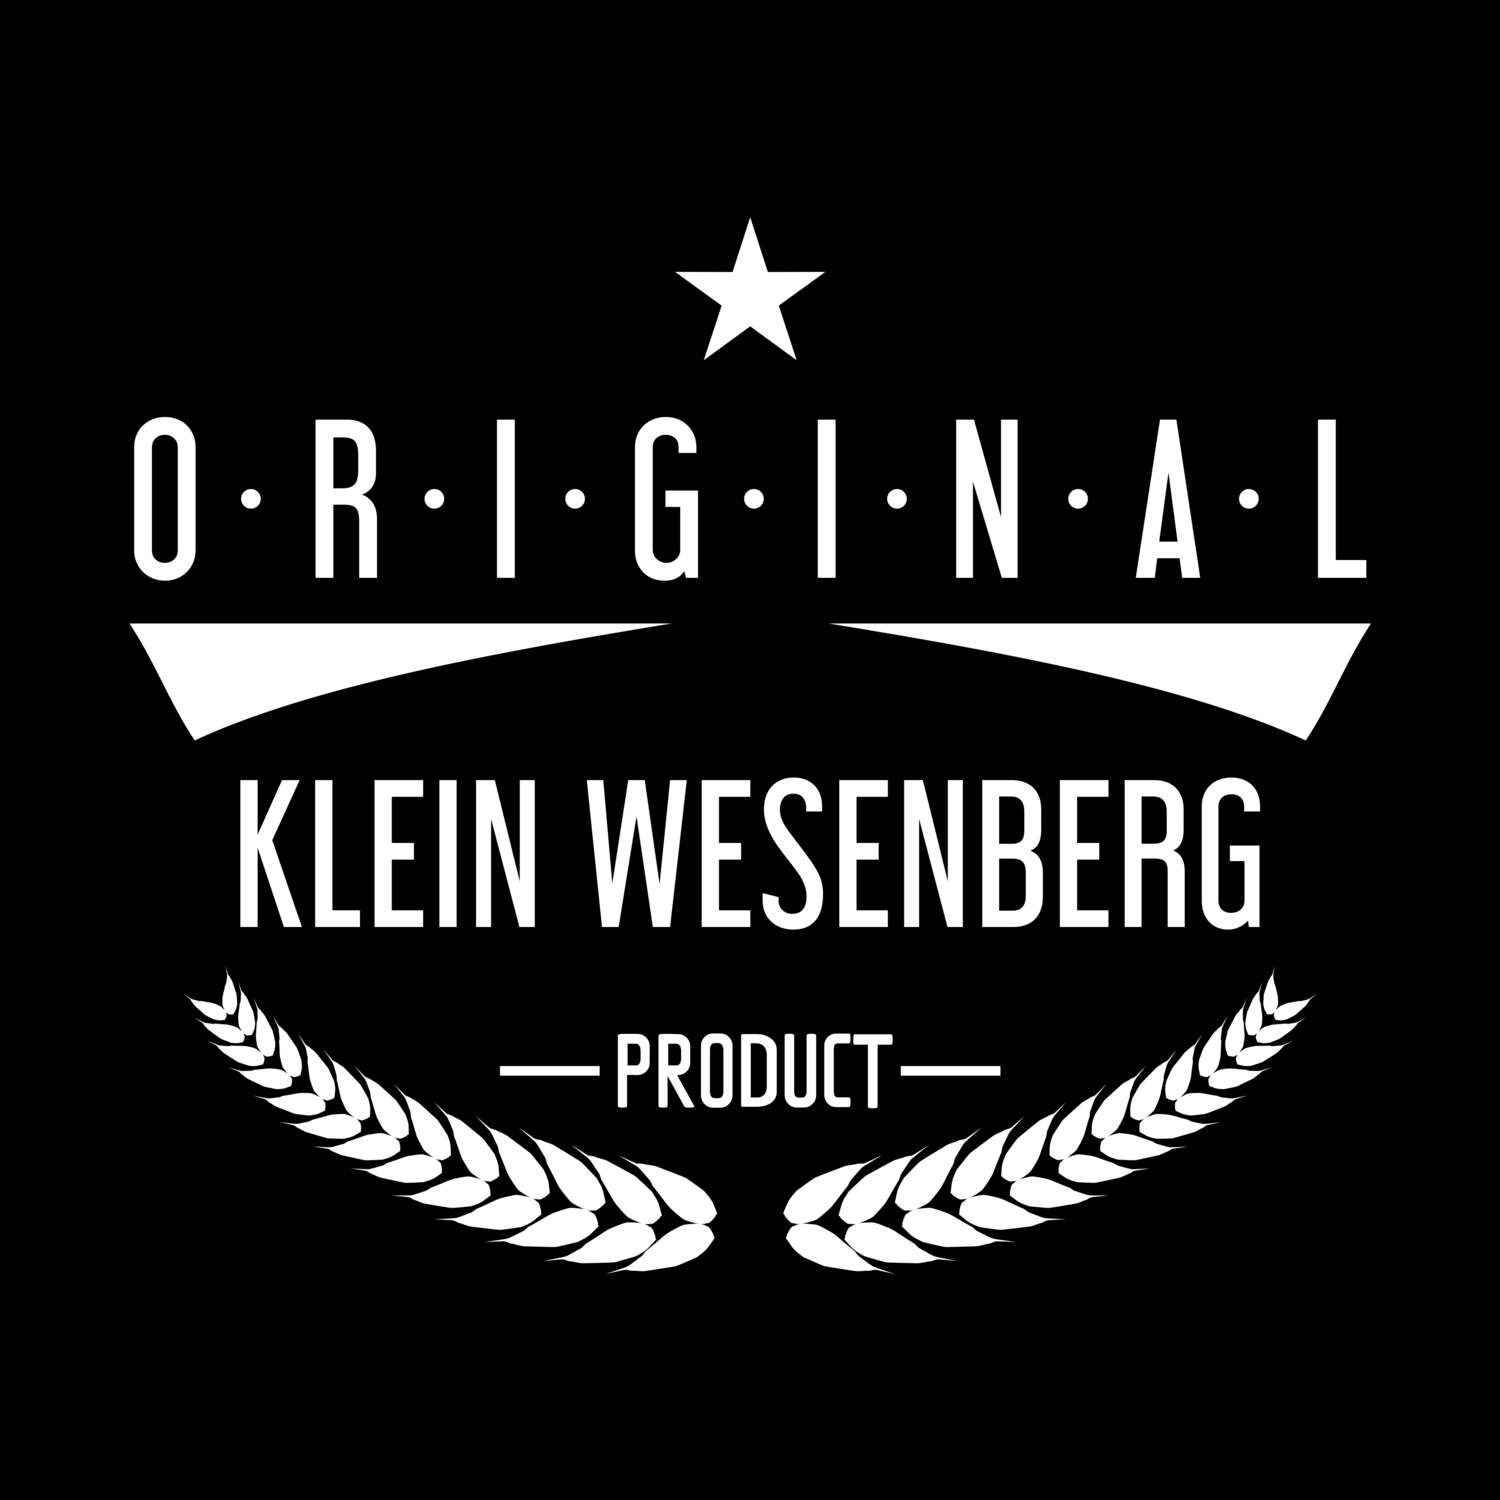 Klein Wesenberg T-Shirt »Original Product«